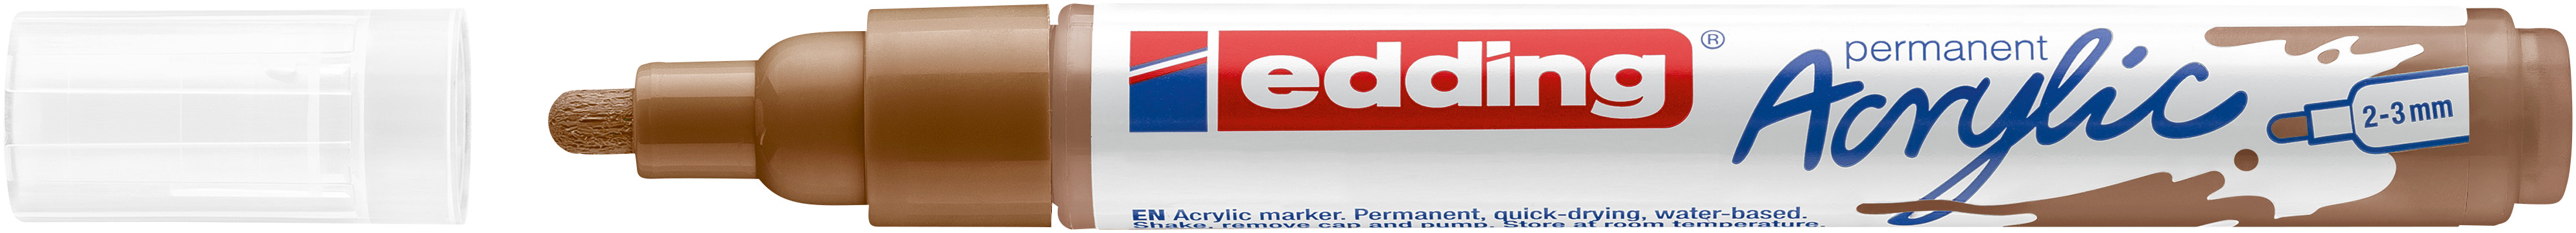 EDDING Acrylmarker 5100 2-3mm 5100-919 hazel